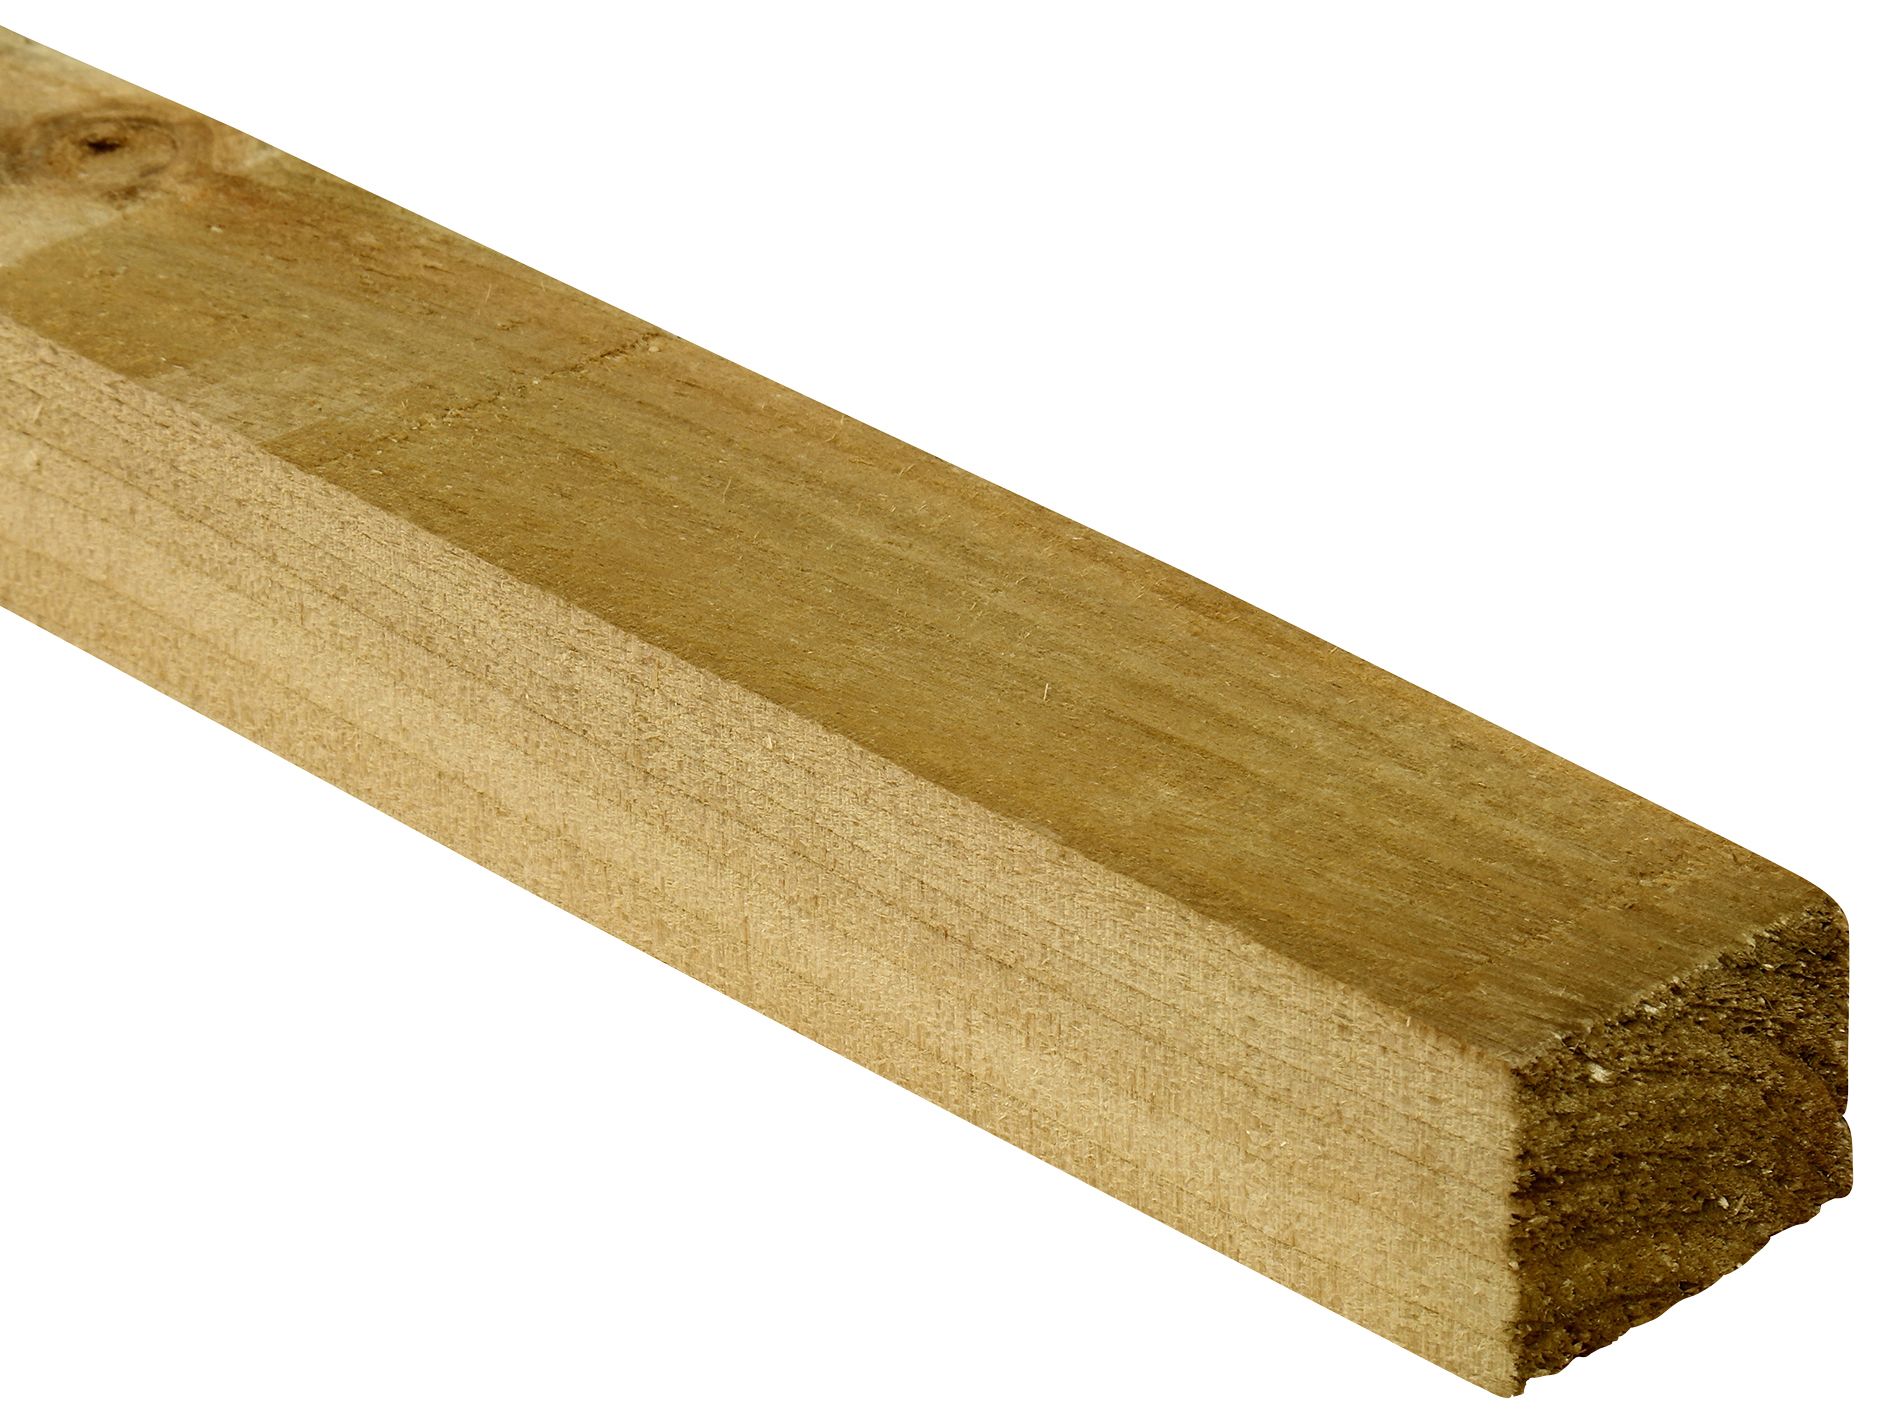 Image of Treated Sawn Kiln Dried Timber - 45 x 45 x 3600m